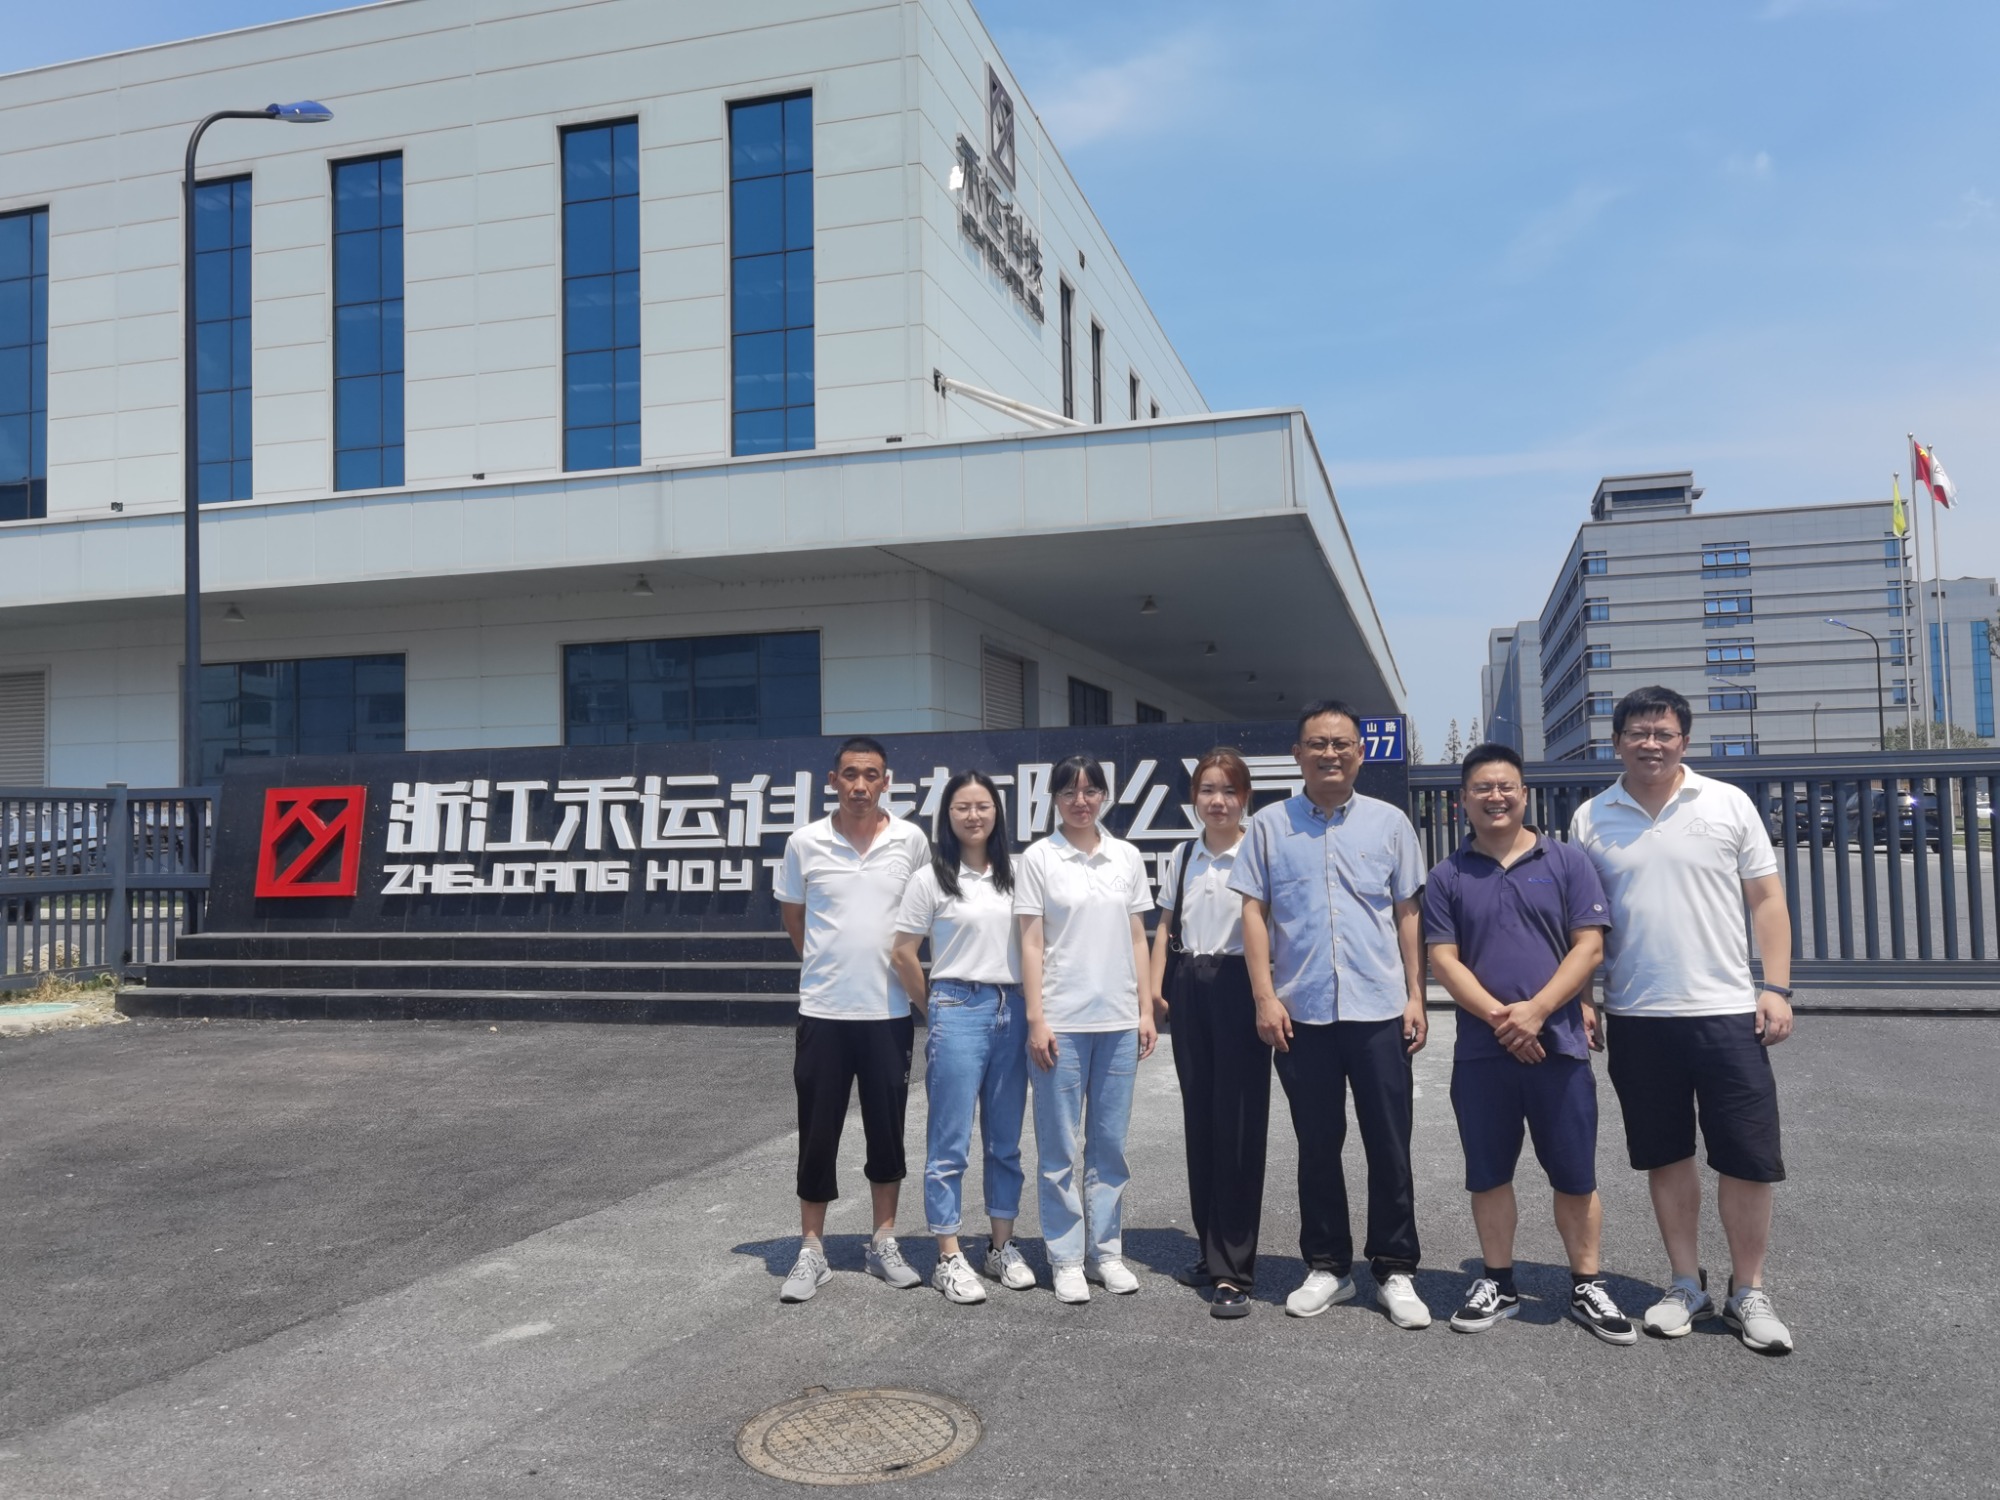 A Visit to Zhejiang Hoy Technology